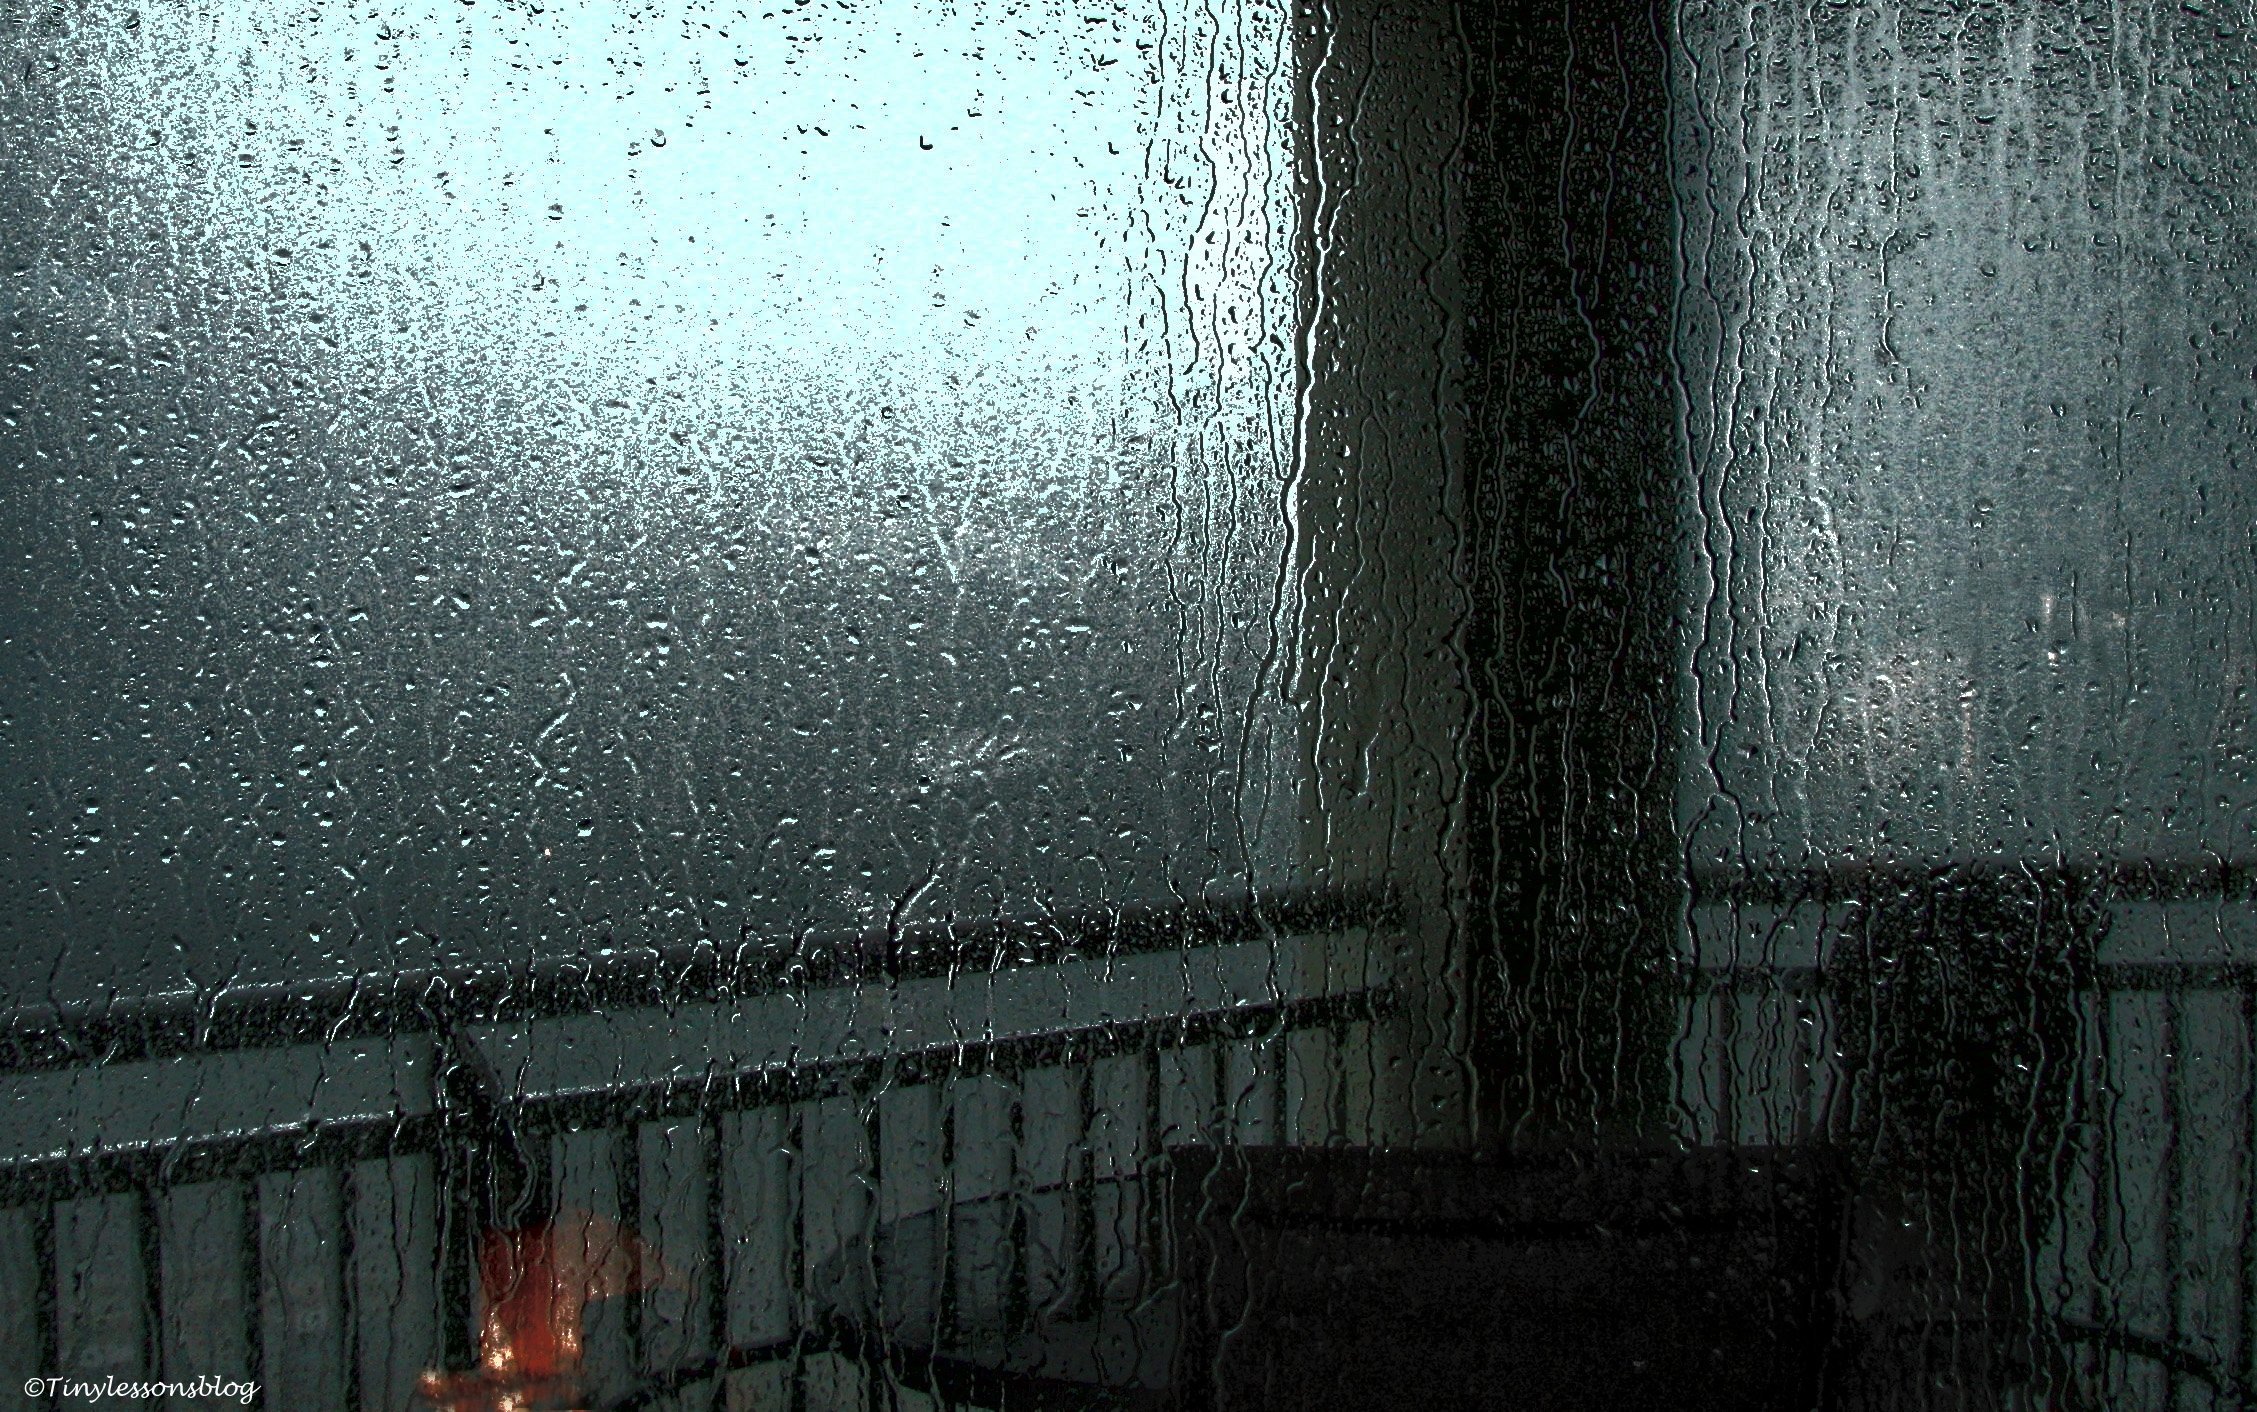 Ilgiz за окном дождь. Дождь за окном. Мрачный дождь. Дождь в окне. Дождь фон.